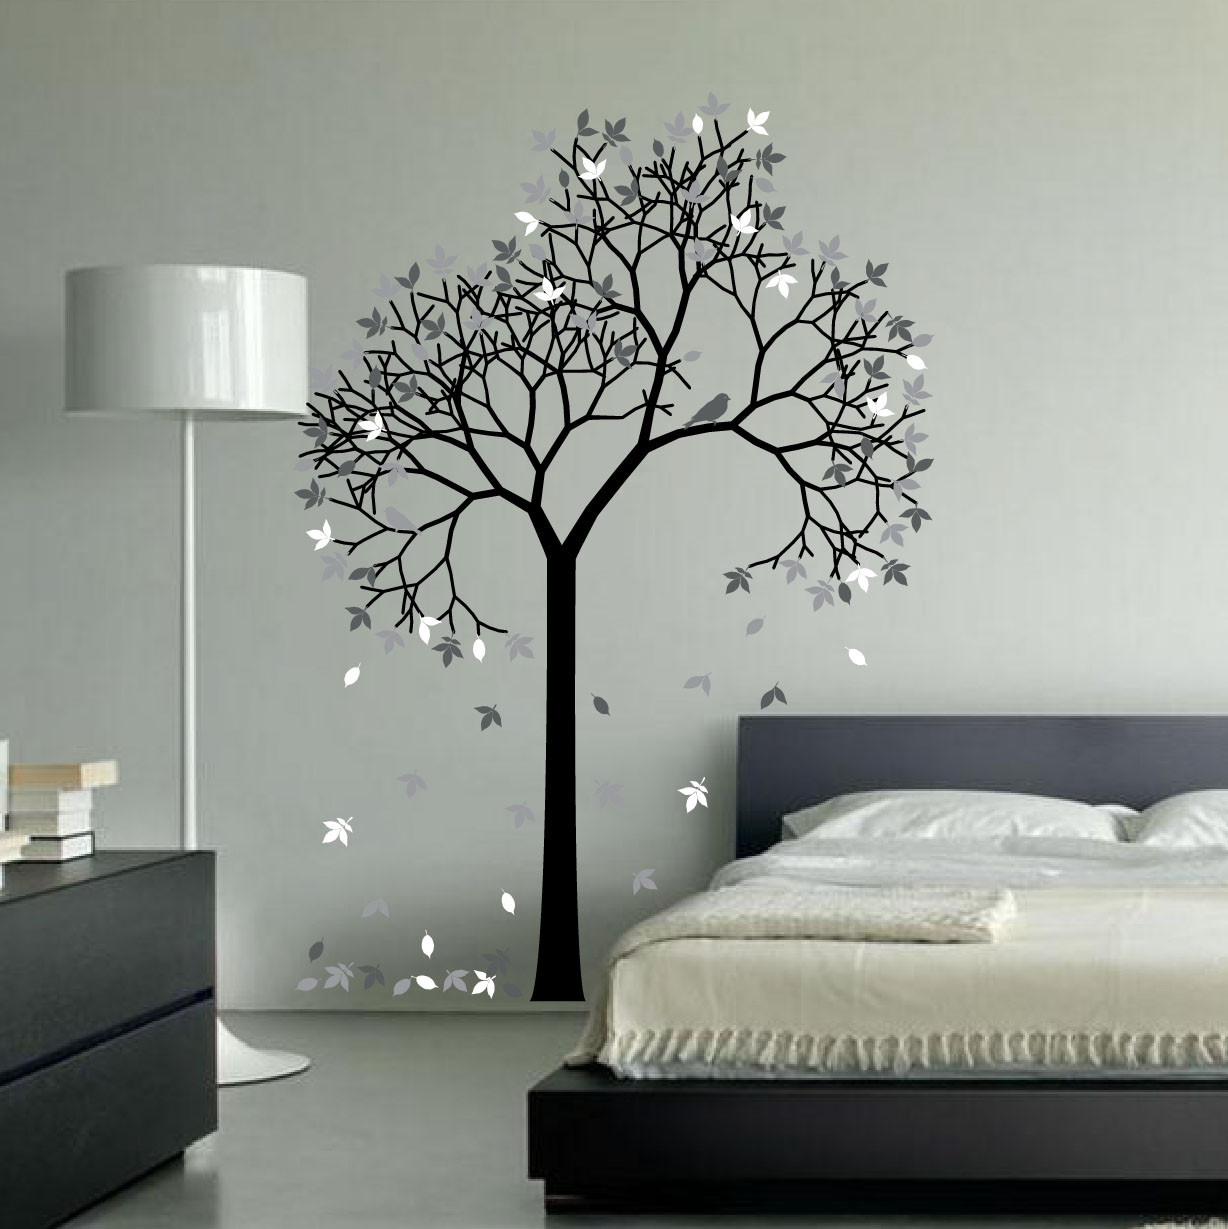 Wall Art Decals For Bedroom
 Aspen Tree Wall Decal Sticker Vinyl Nursert Art Leaves and